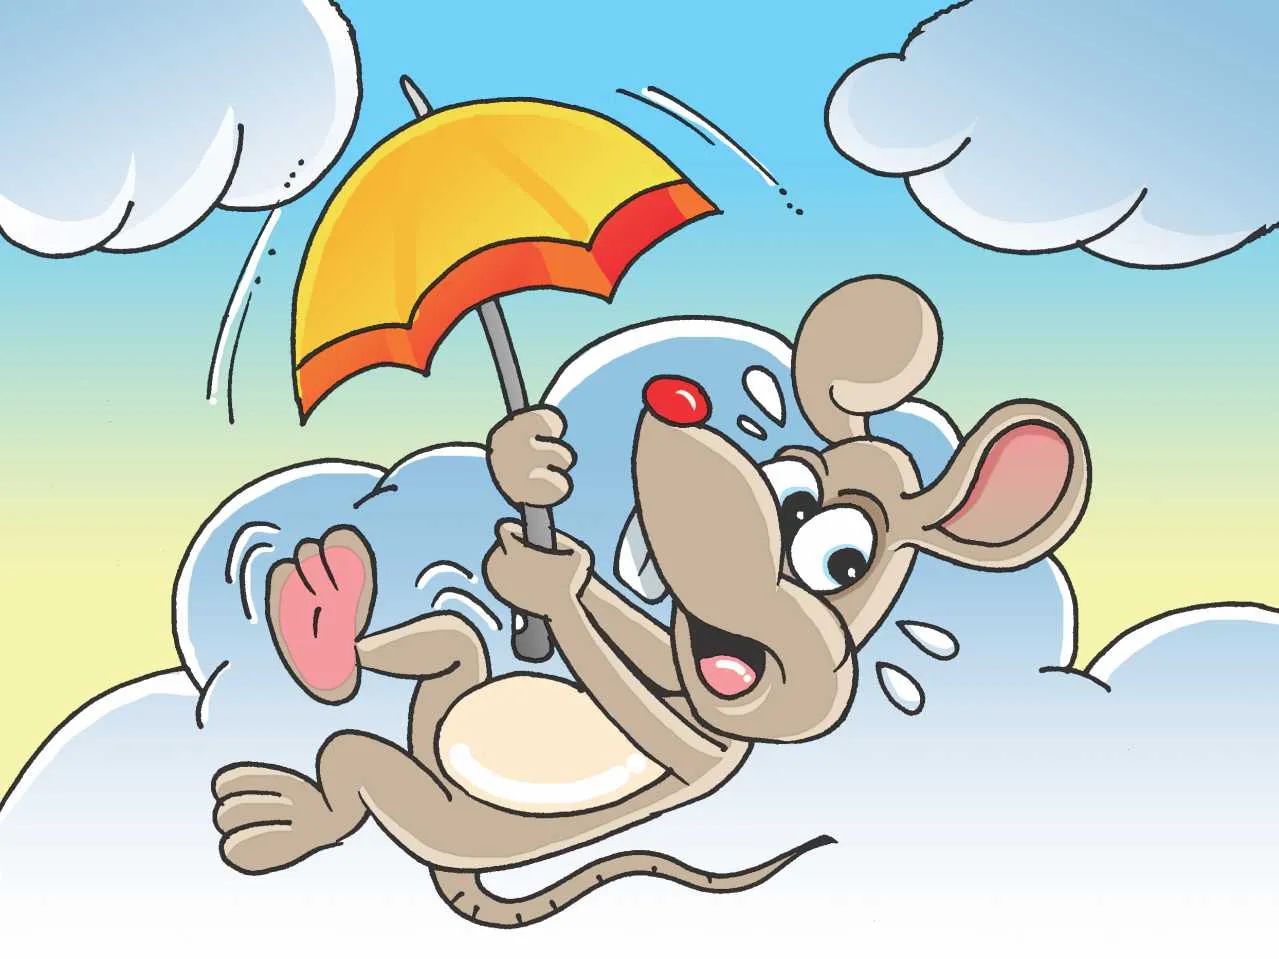 Mouse with an Umbrella cartoon image